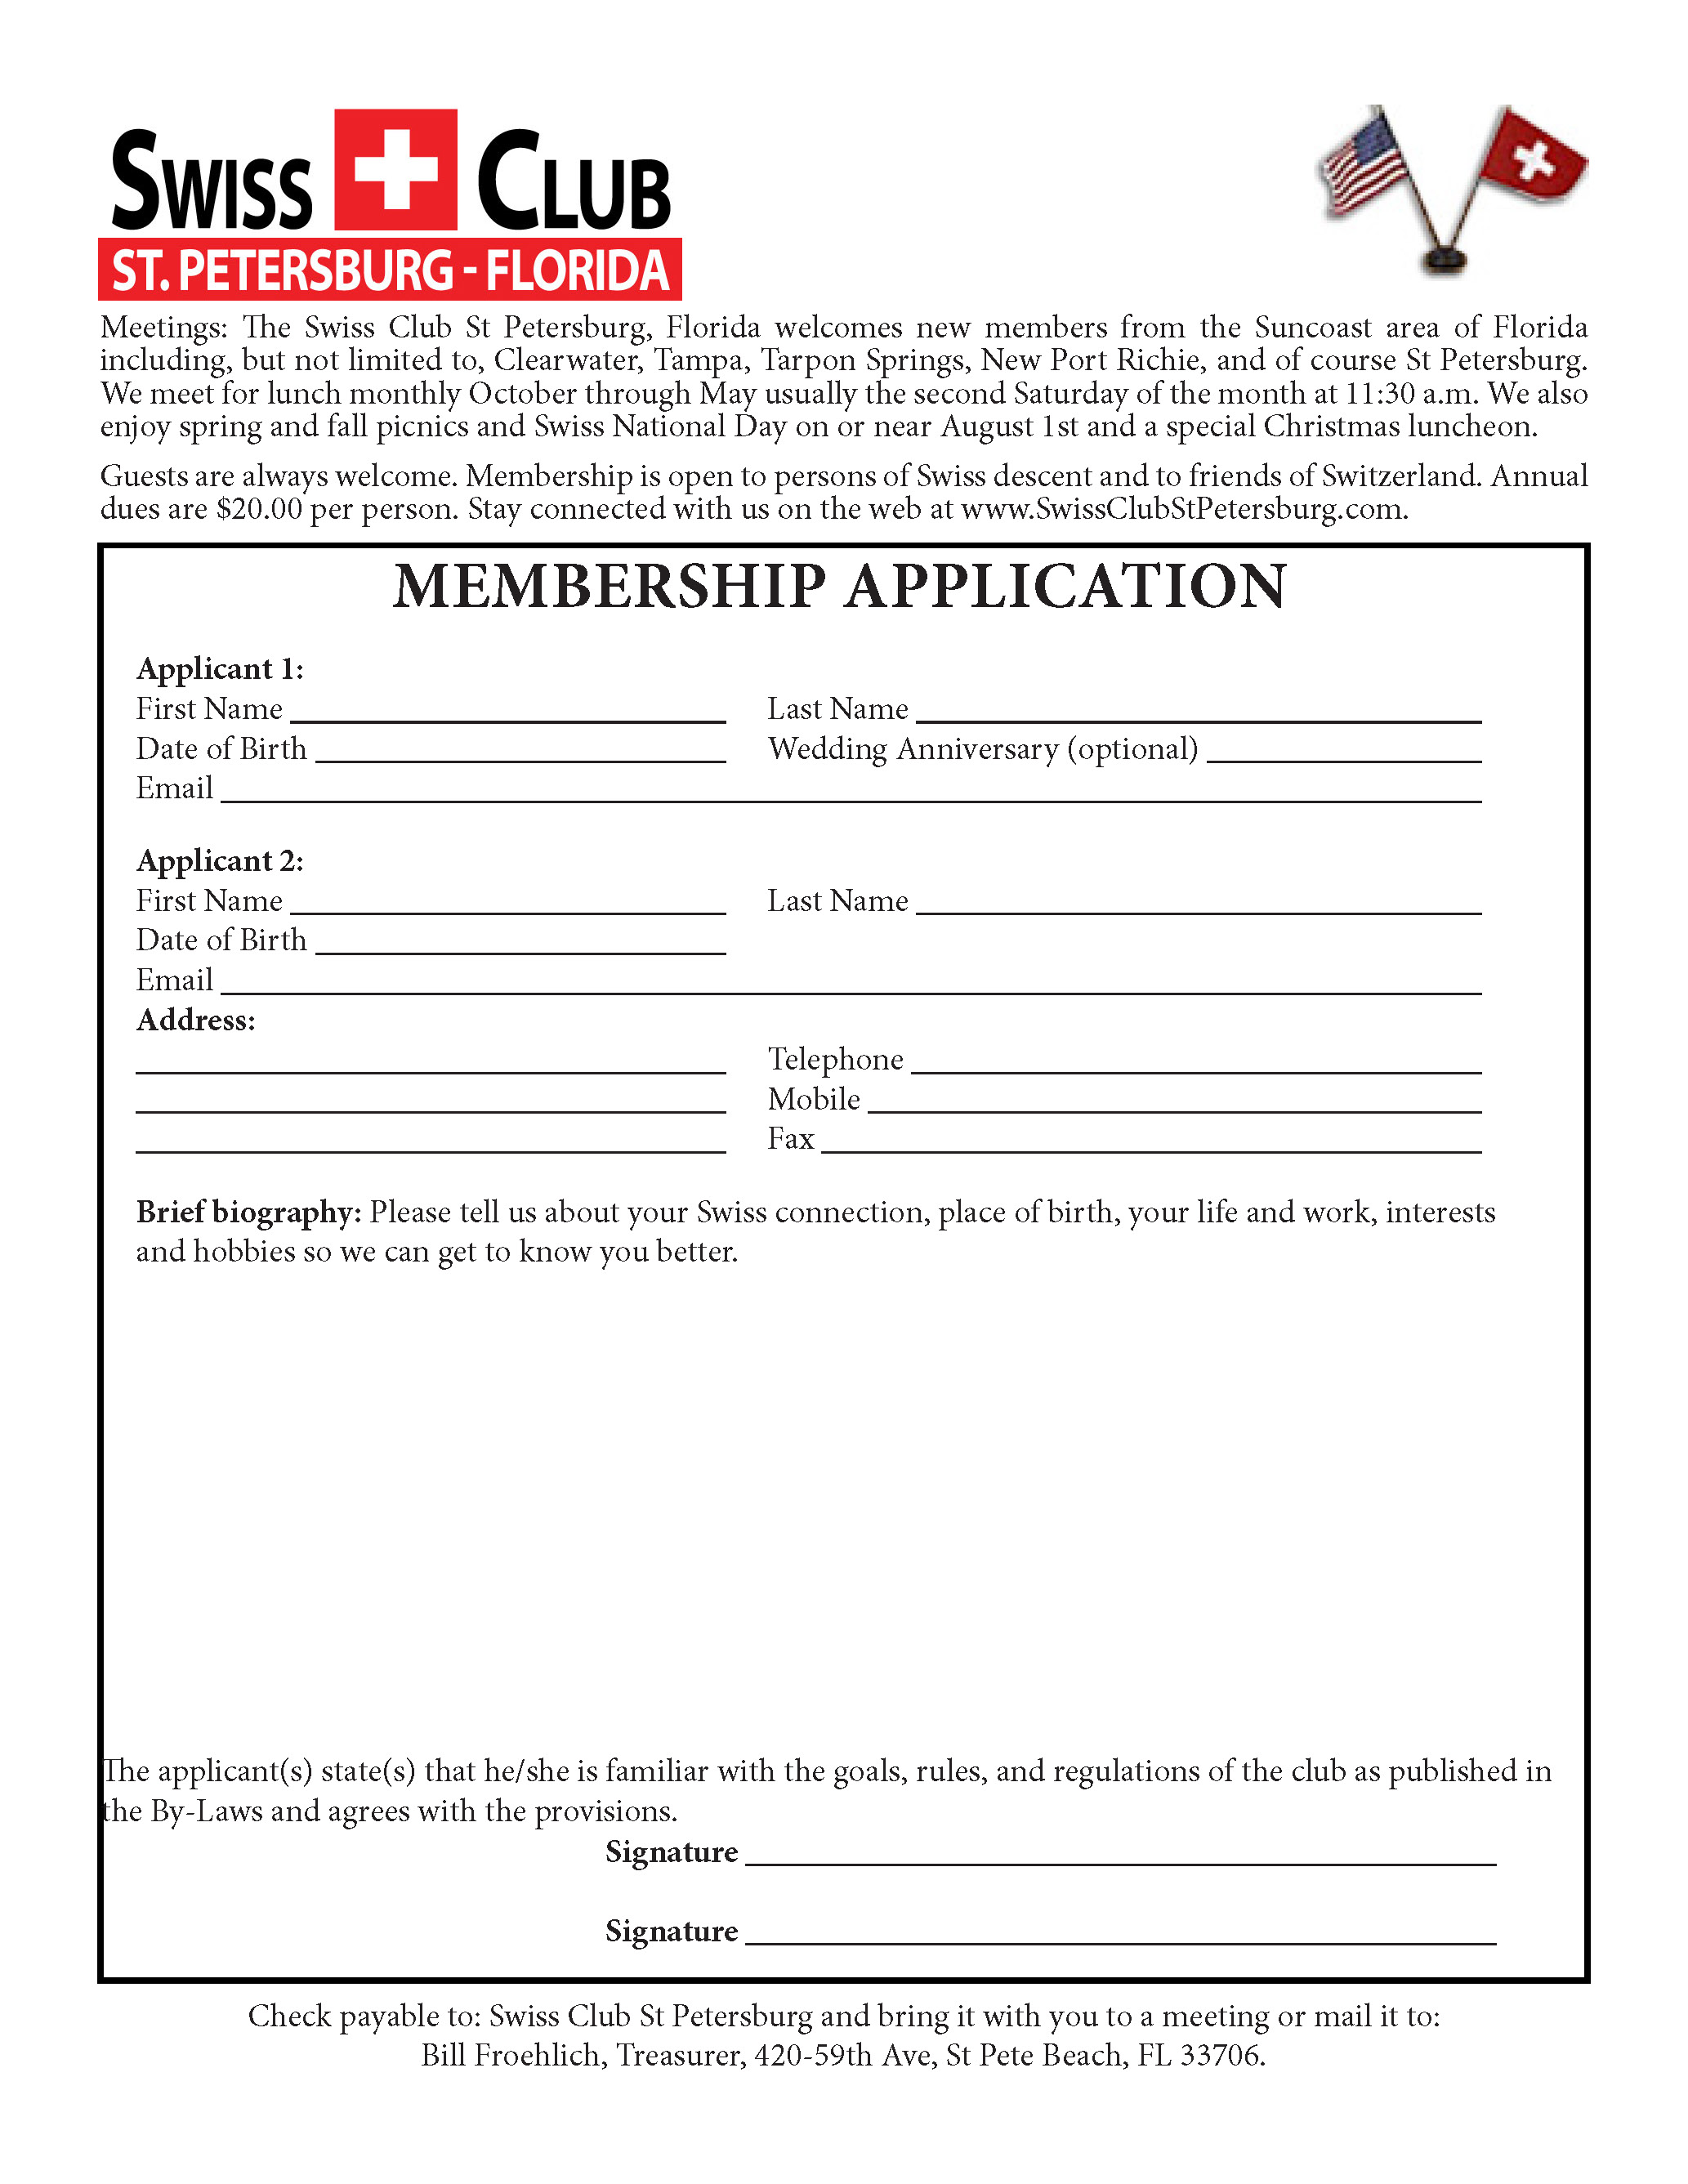 Swiss Club Membership Application